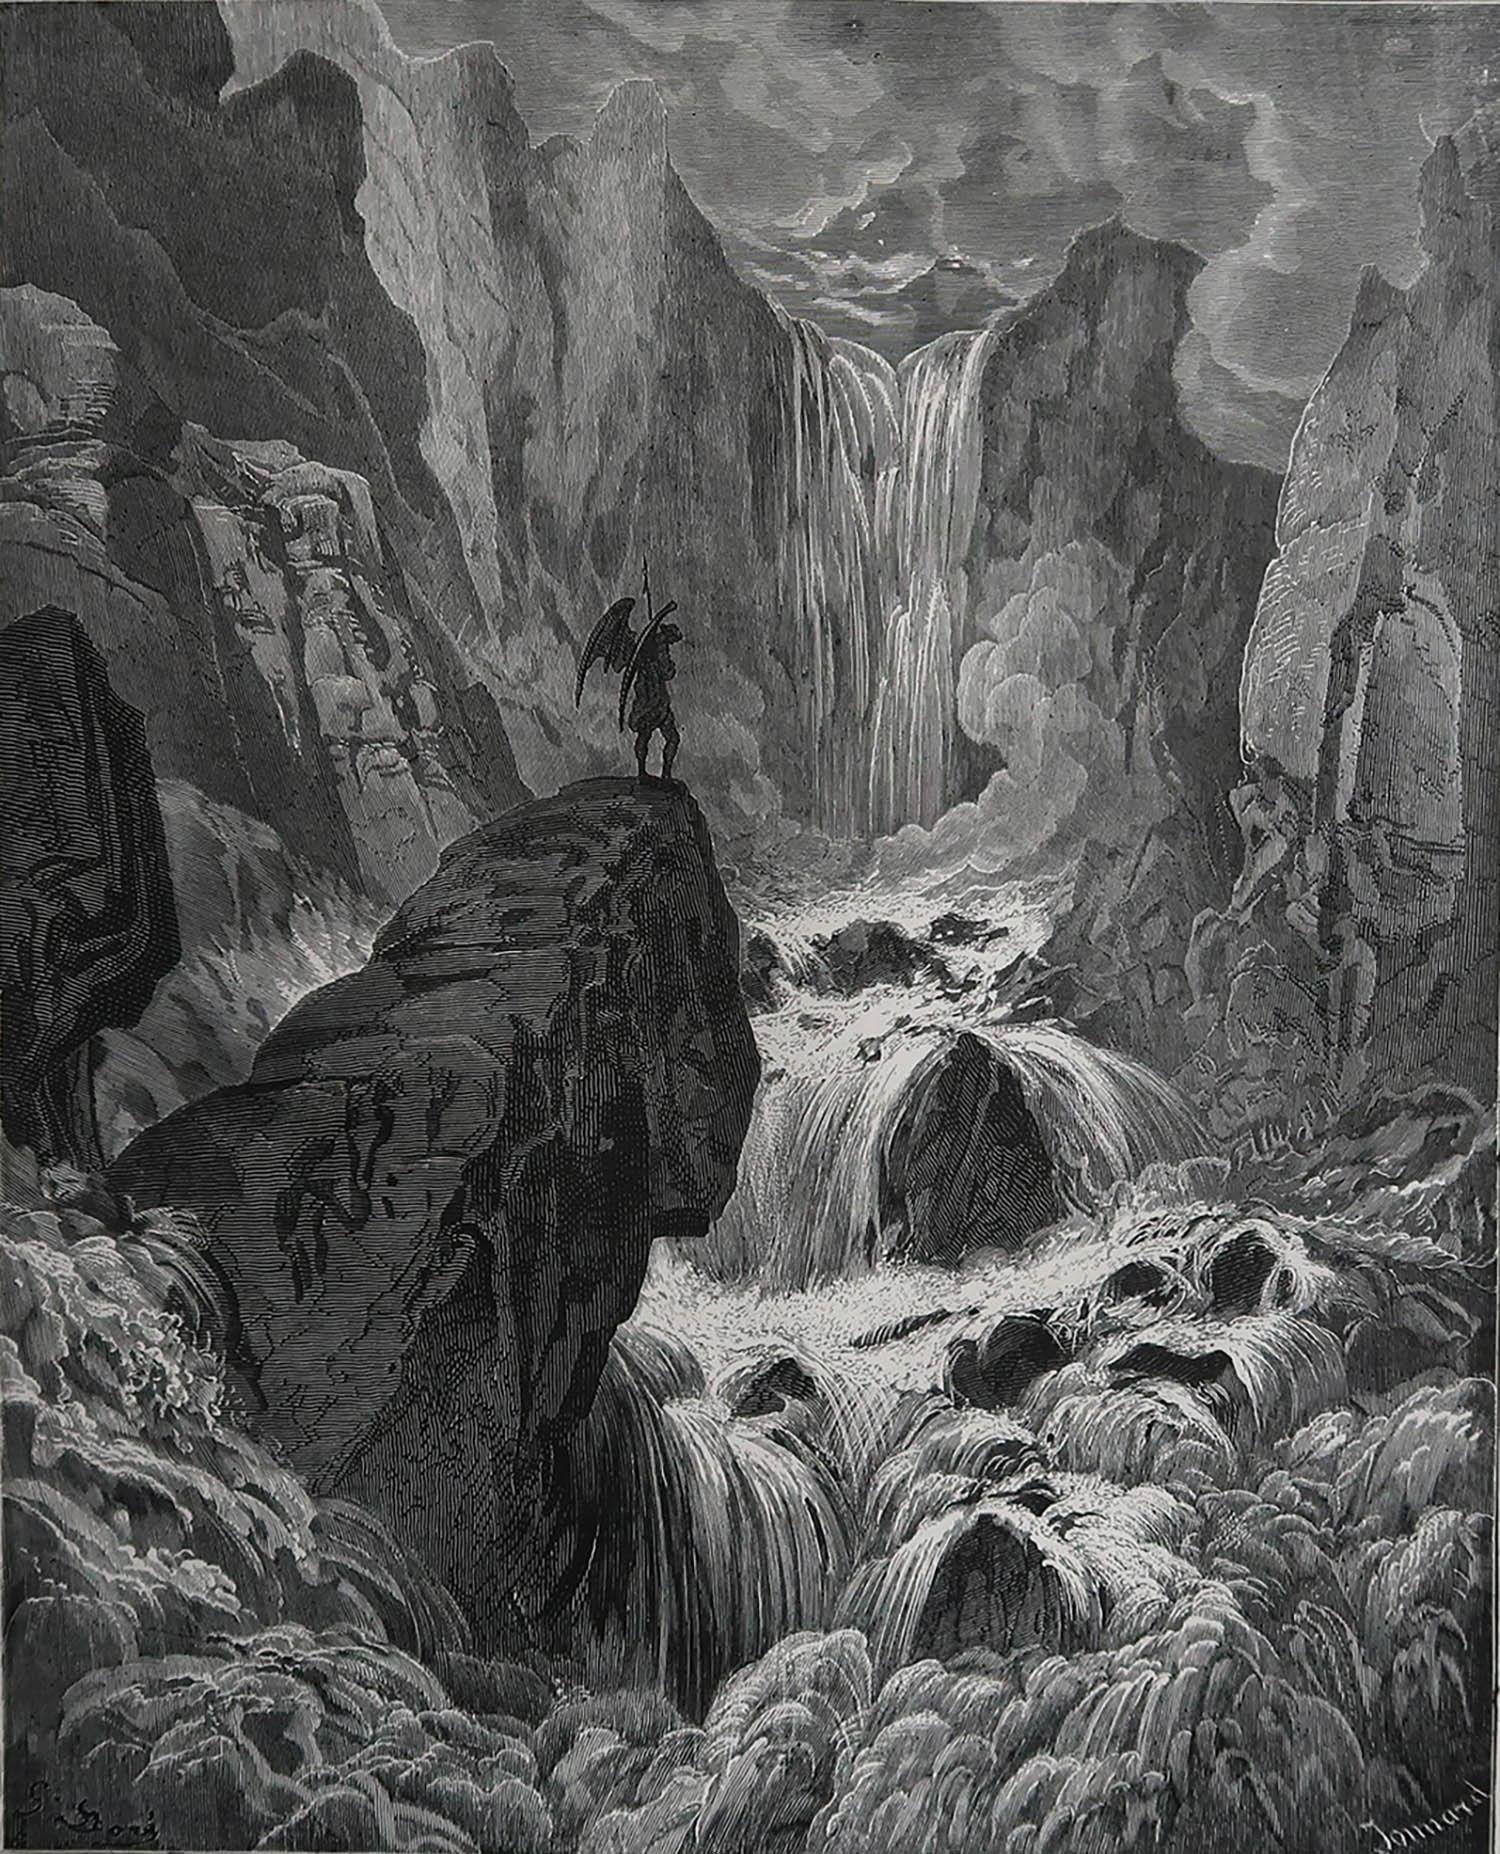 Sensational image by Gustave Doré

Originally an illustration for JohnMilton's 